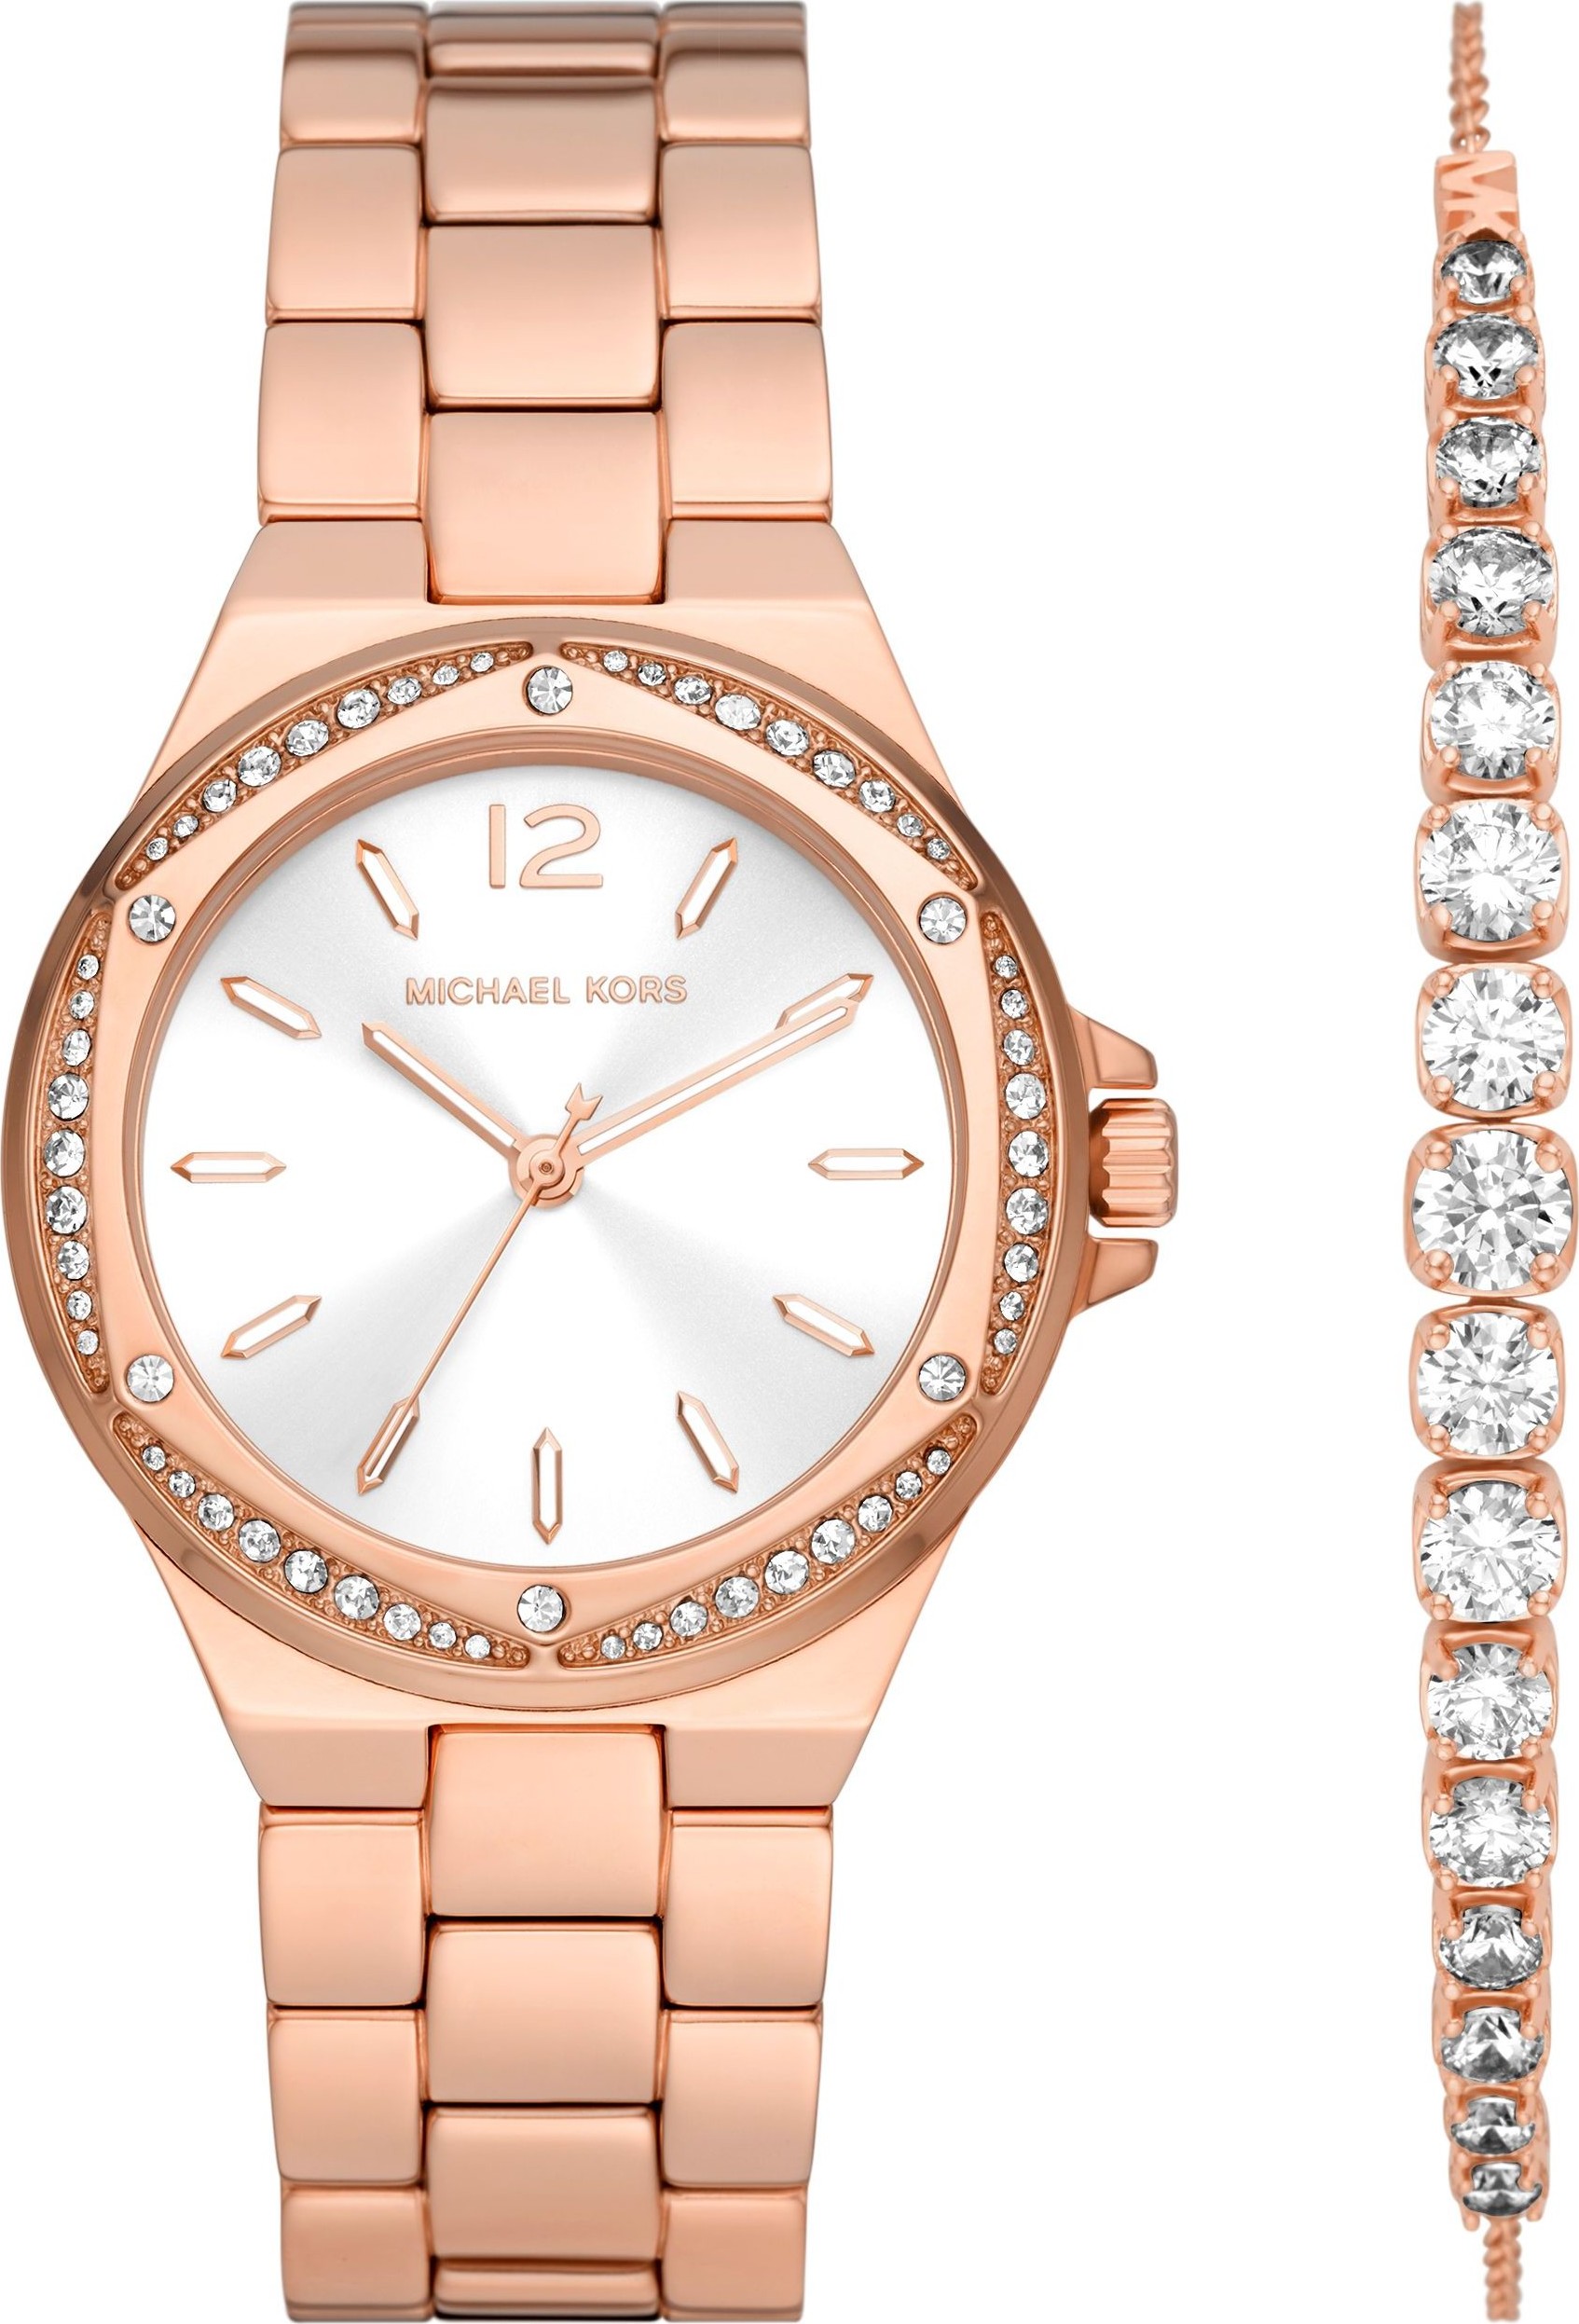 Rose Goldtone Lennox Watch And Bracelet Gift Set  Michael Kors